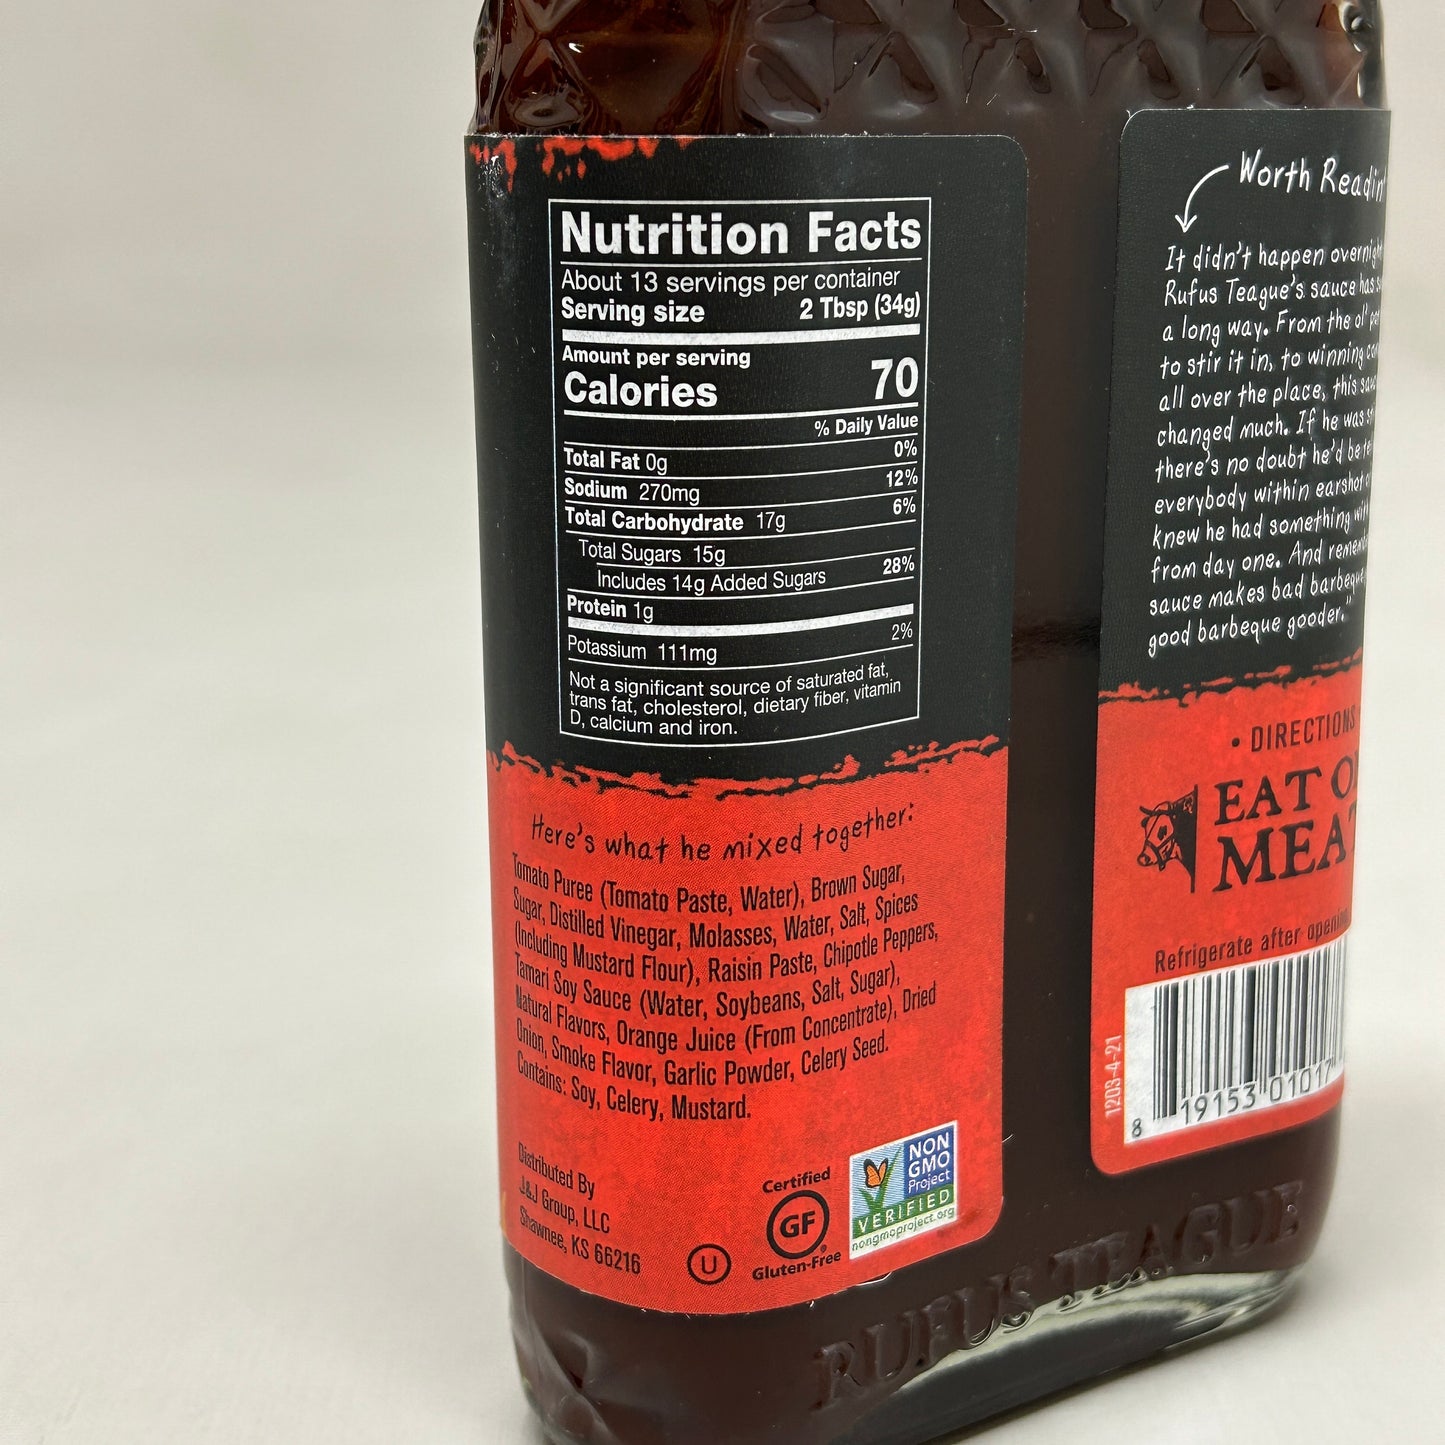 RUFUS TEAGUE 6-PACK! Blazin' Hot BBQ Sauce 15.25 oz Gluten Free Non GMO Exp 06/25 (New)